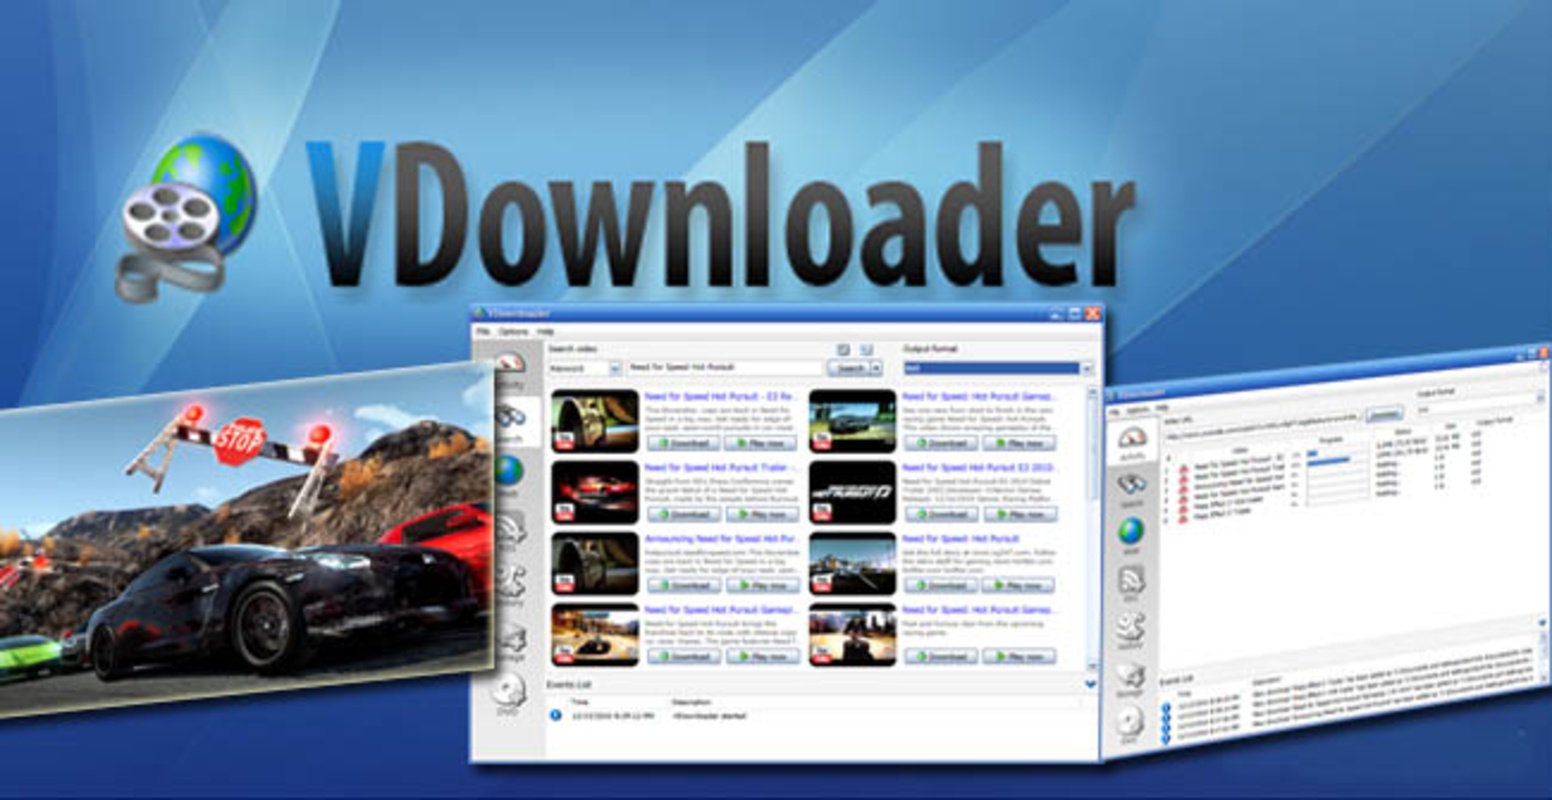 VDownloader 4.2.2001.0 feature